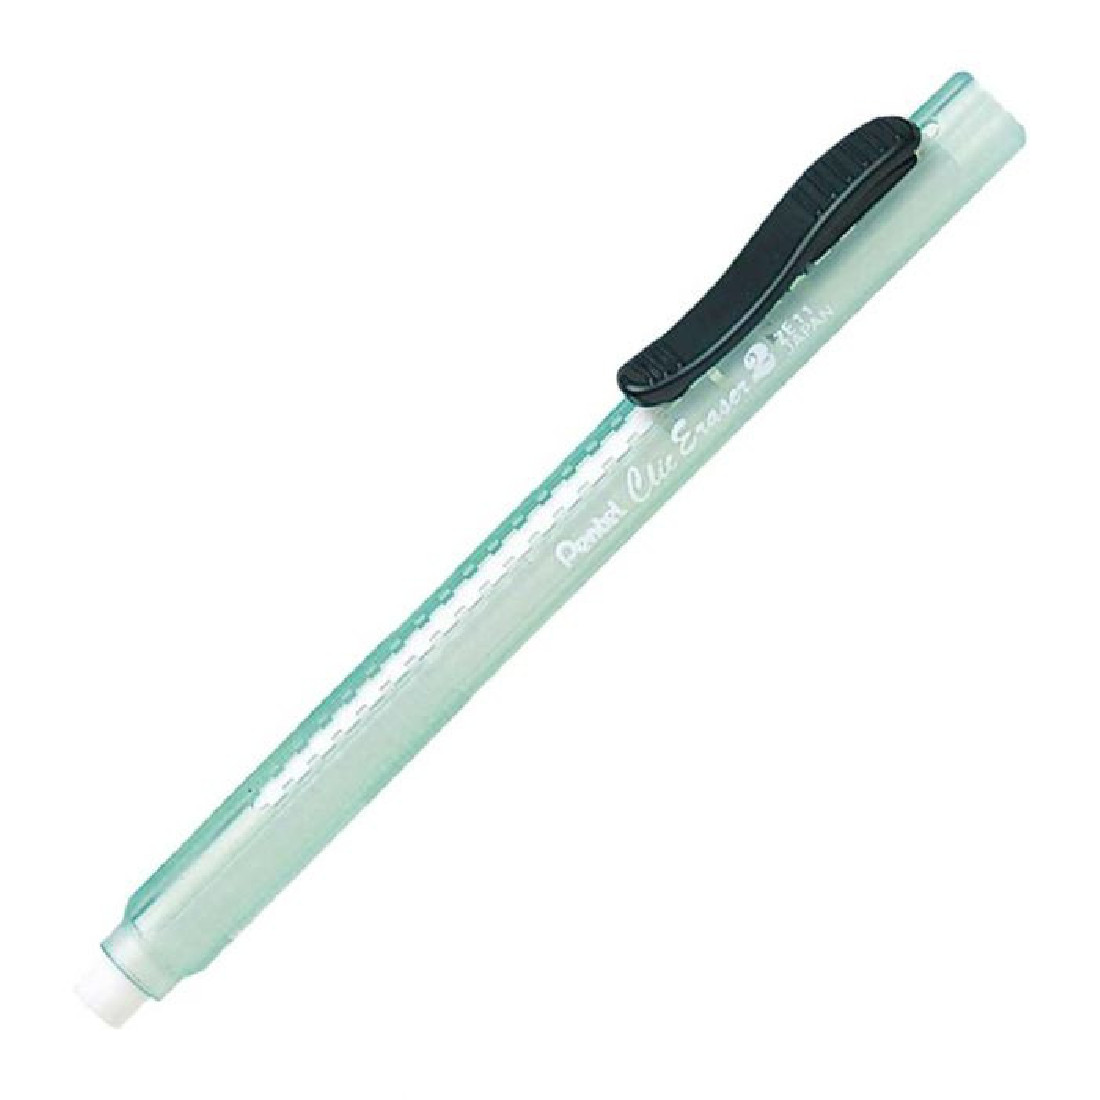 180300 glass eraser pencil